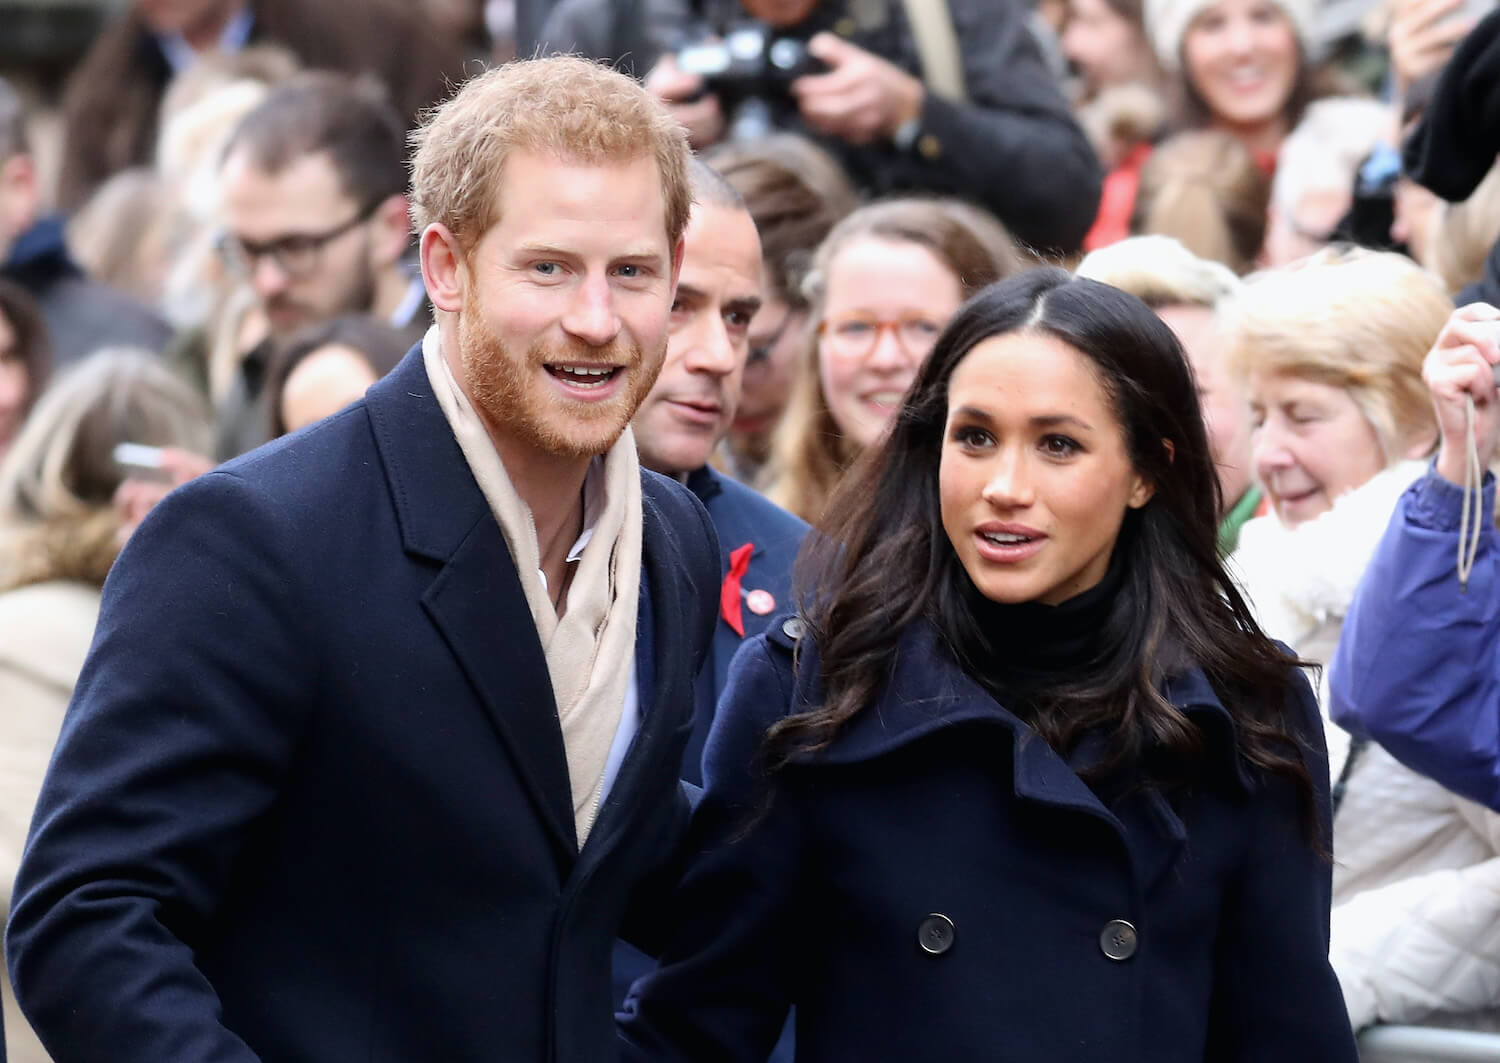 Prince Harry grins wearing a coat alongside Meghan Markle who looks off while wearing a dark coat